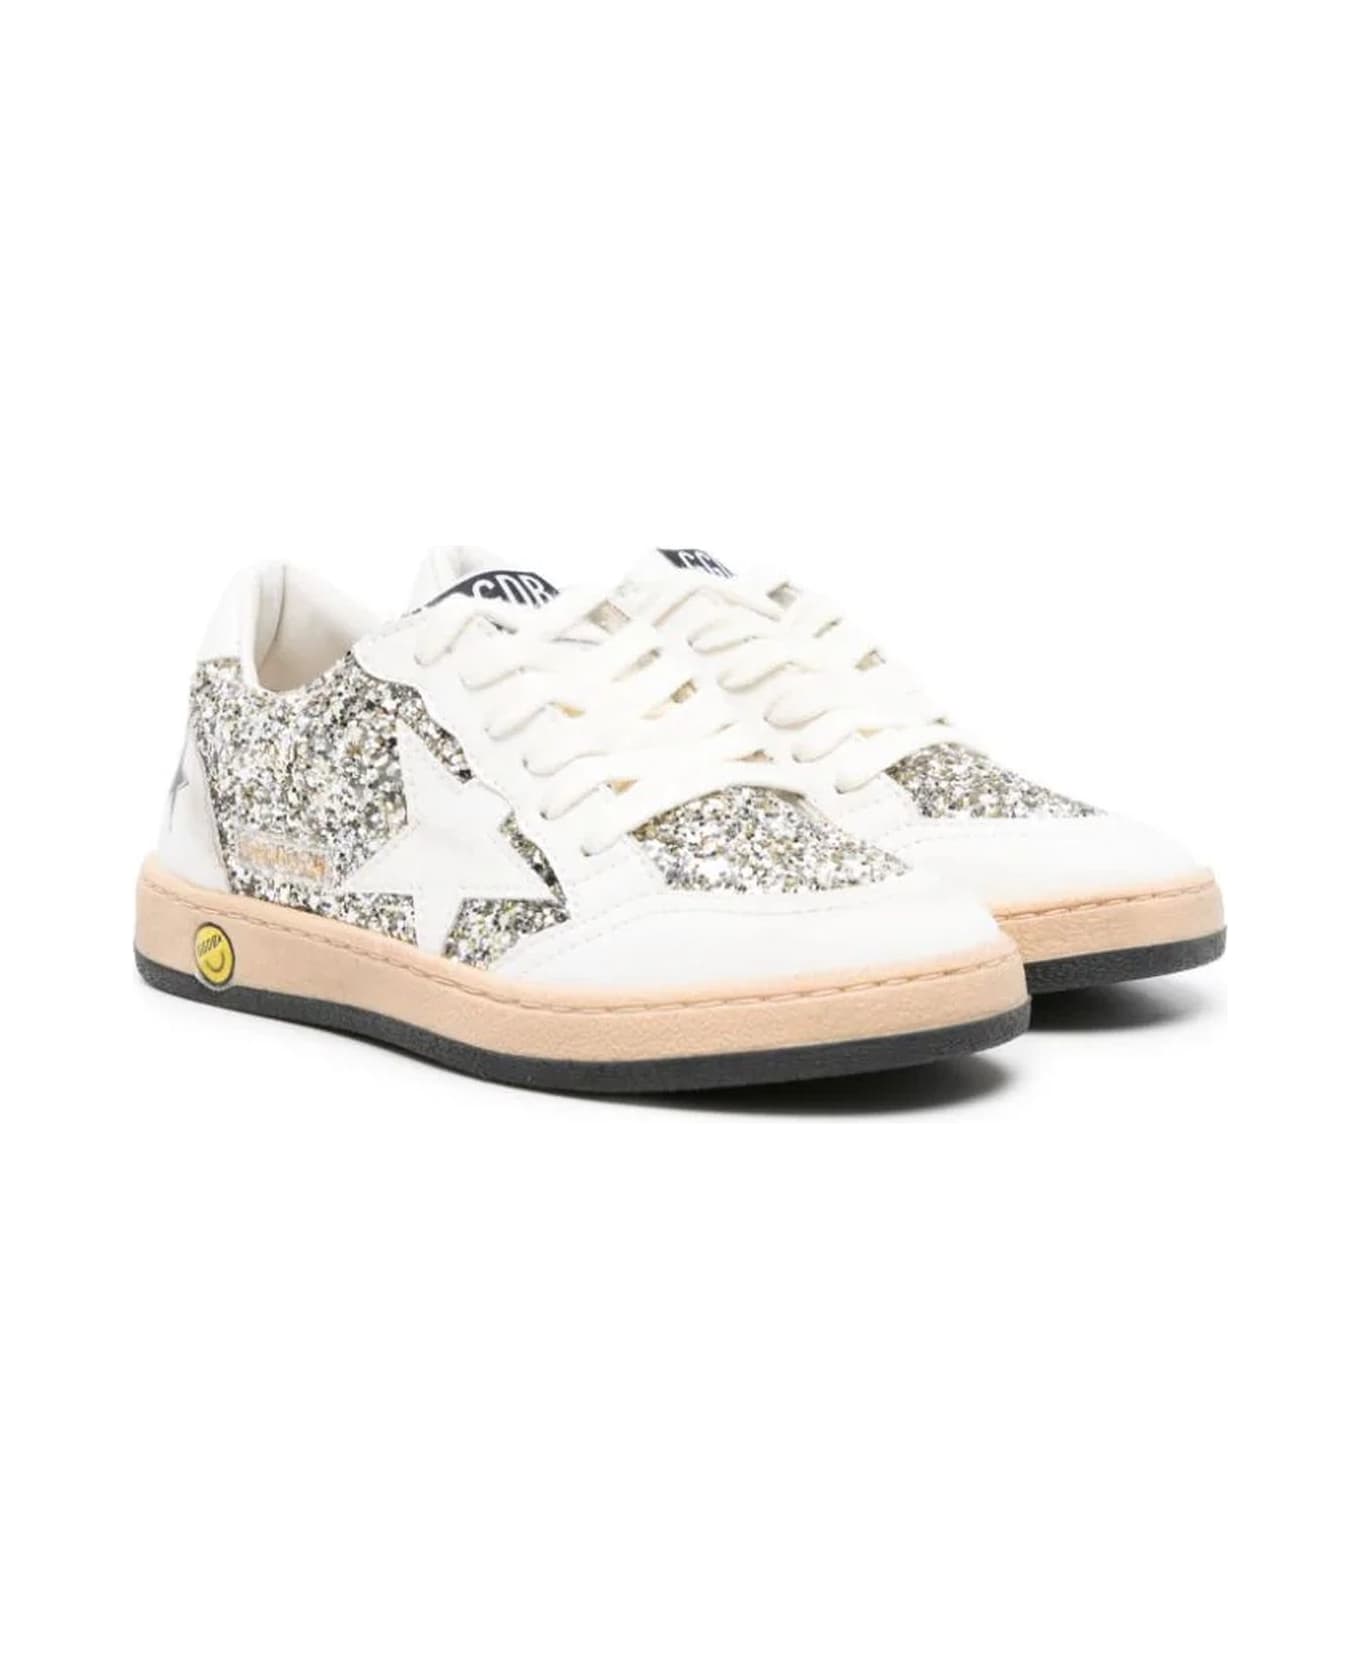 Golden Goose White Leather Sneakers - Optic White/Platinum シューズ